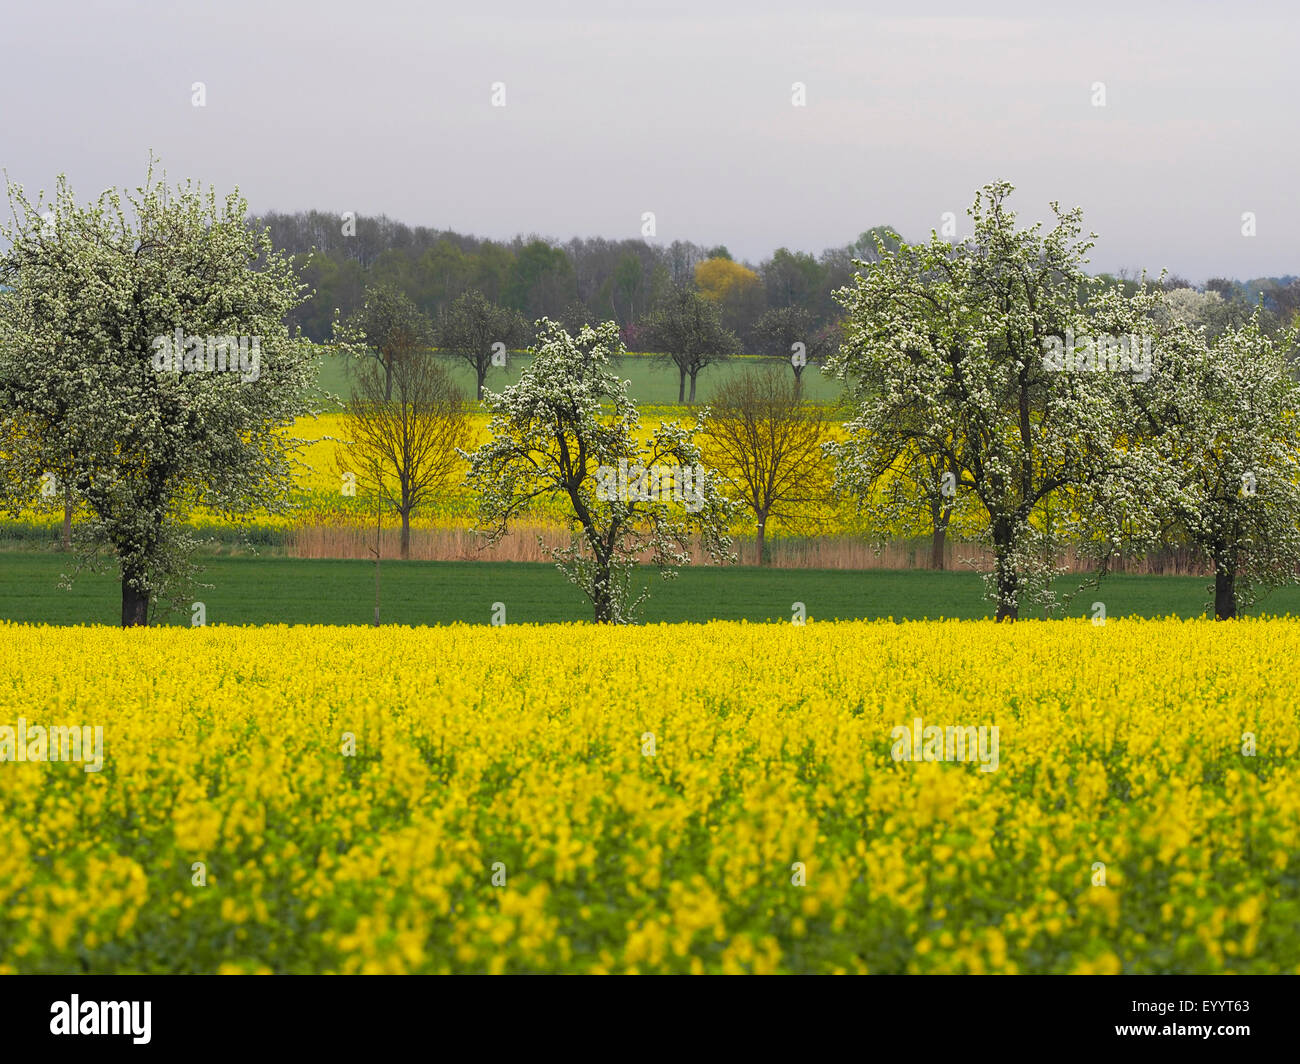 rape, turnip (Brassica napus), blooming rape field, Germany, Brandenburg, Niederelausitz Stock Photo